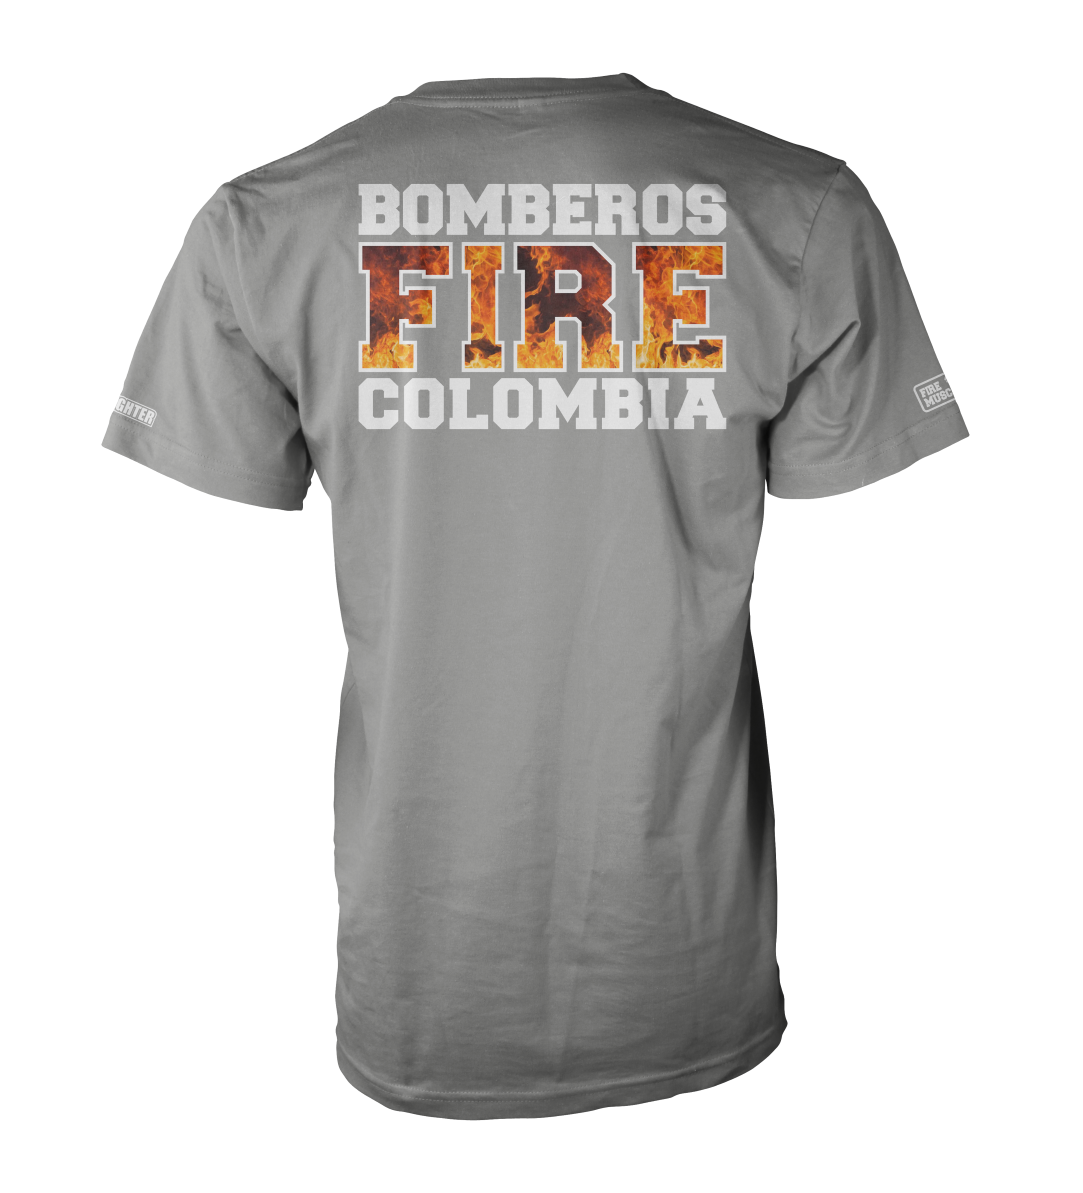 CAMISETA FIRE BOMBEROS COLOMBIA LLAMAS GRIS (CAMISETA)